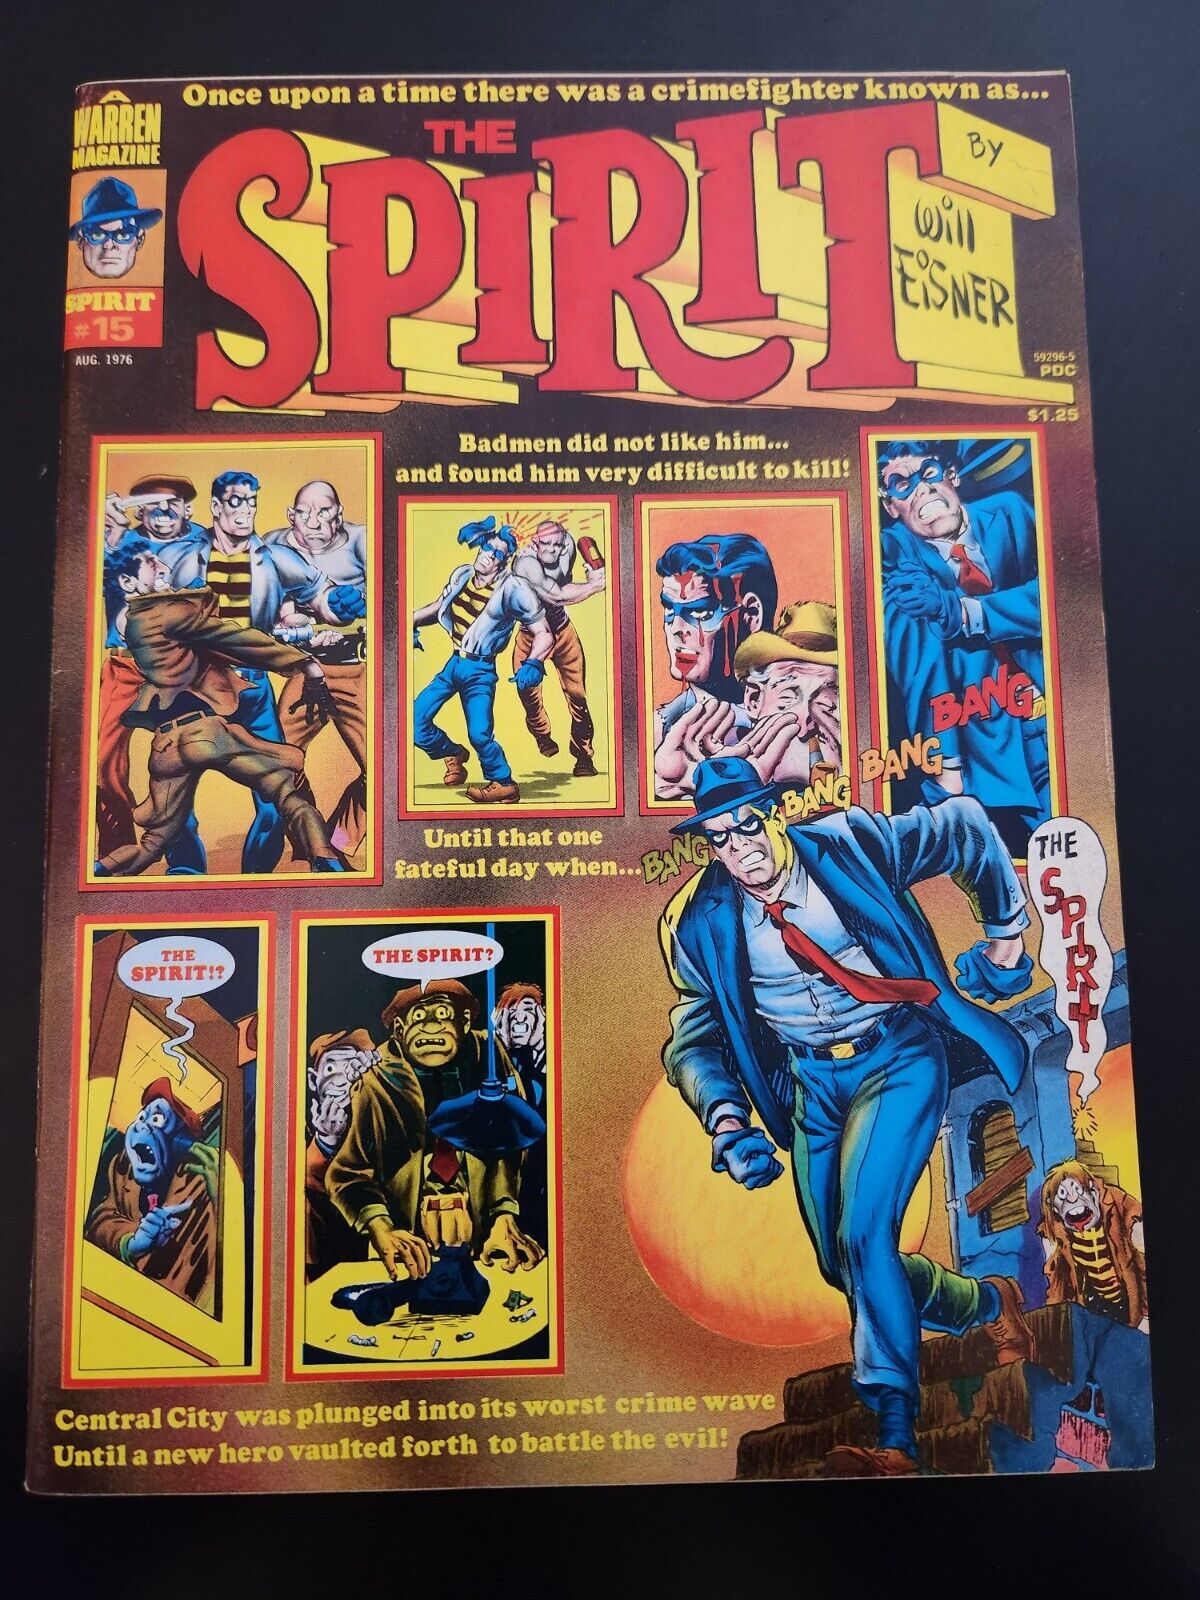 THE SPIRIT #15 AUG 1976 WARREN PUBLICATIONS WILL EISNER 